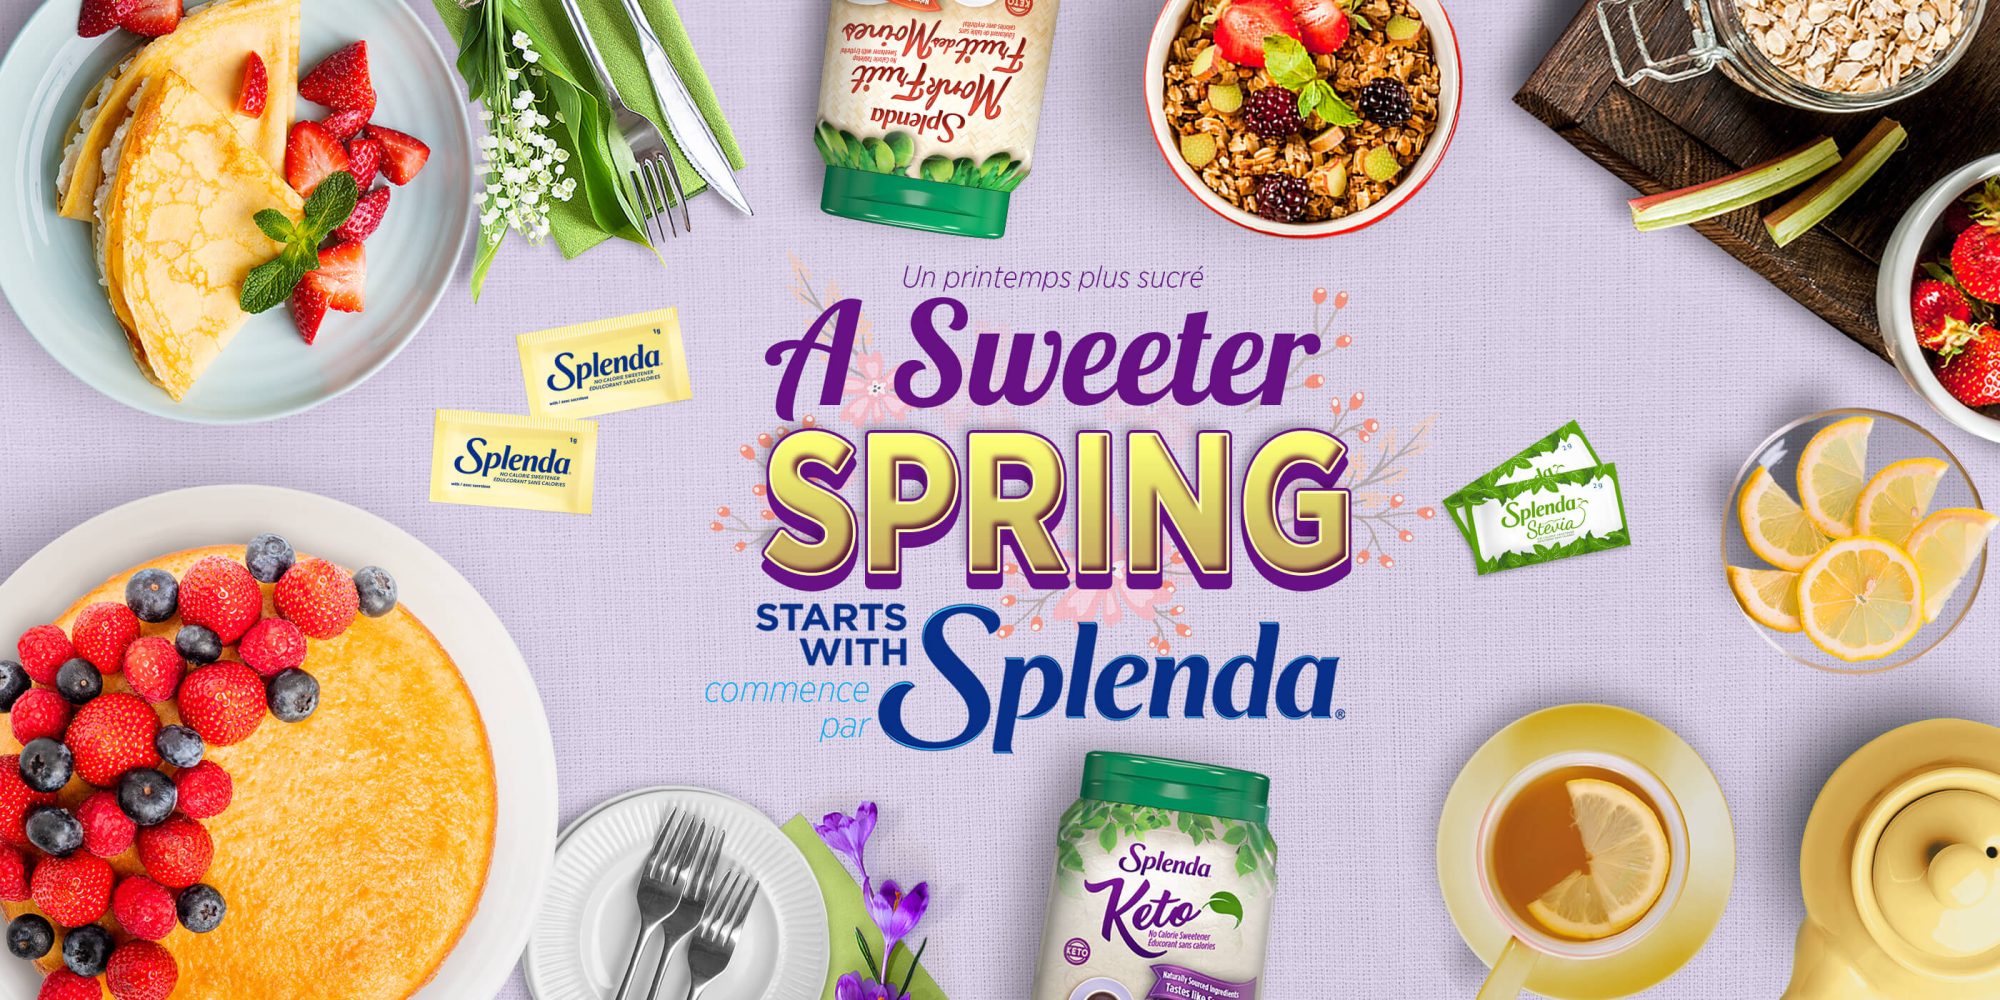 A sweeter spring starts with Splenda